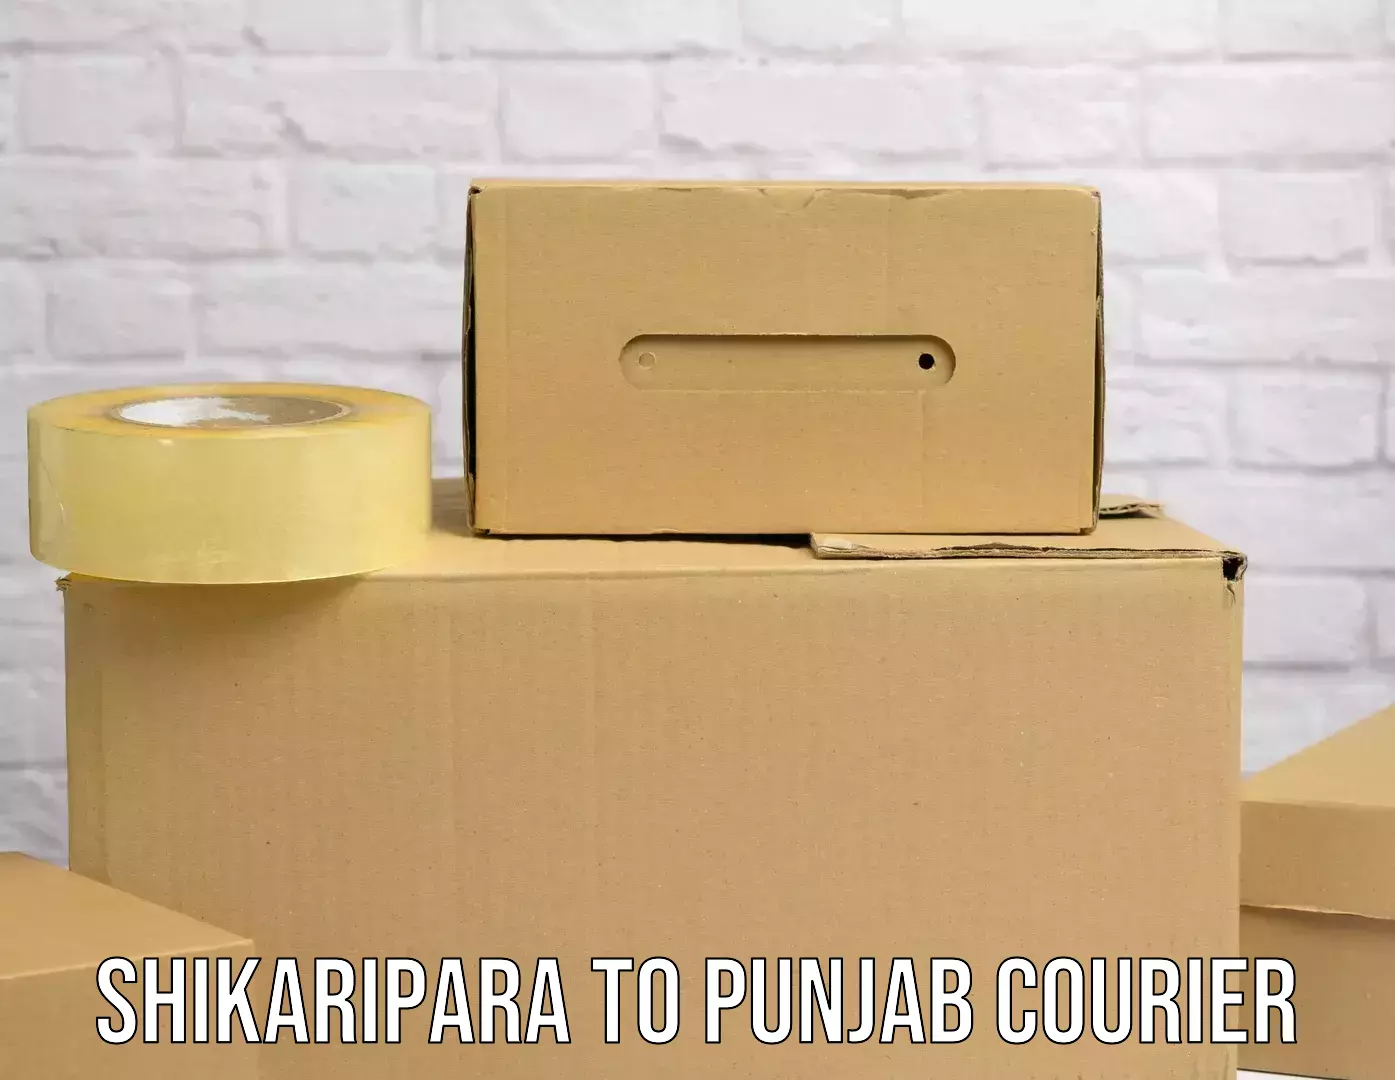 Full-service courier options Shikaripara to Phagwara